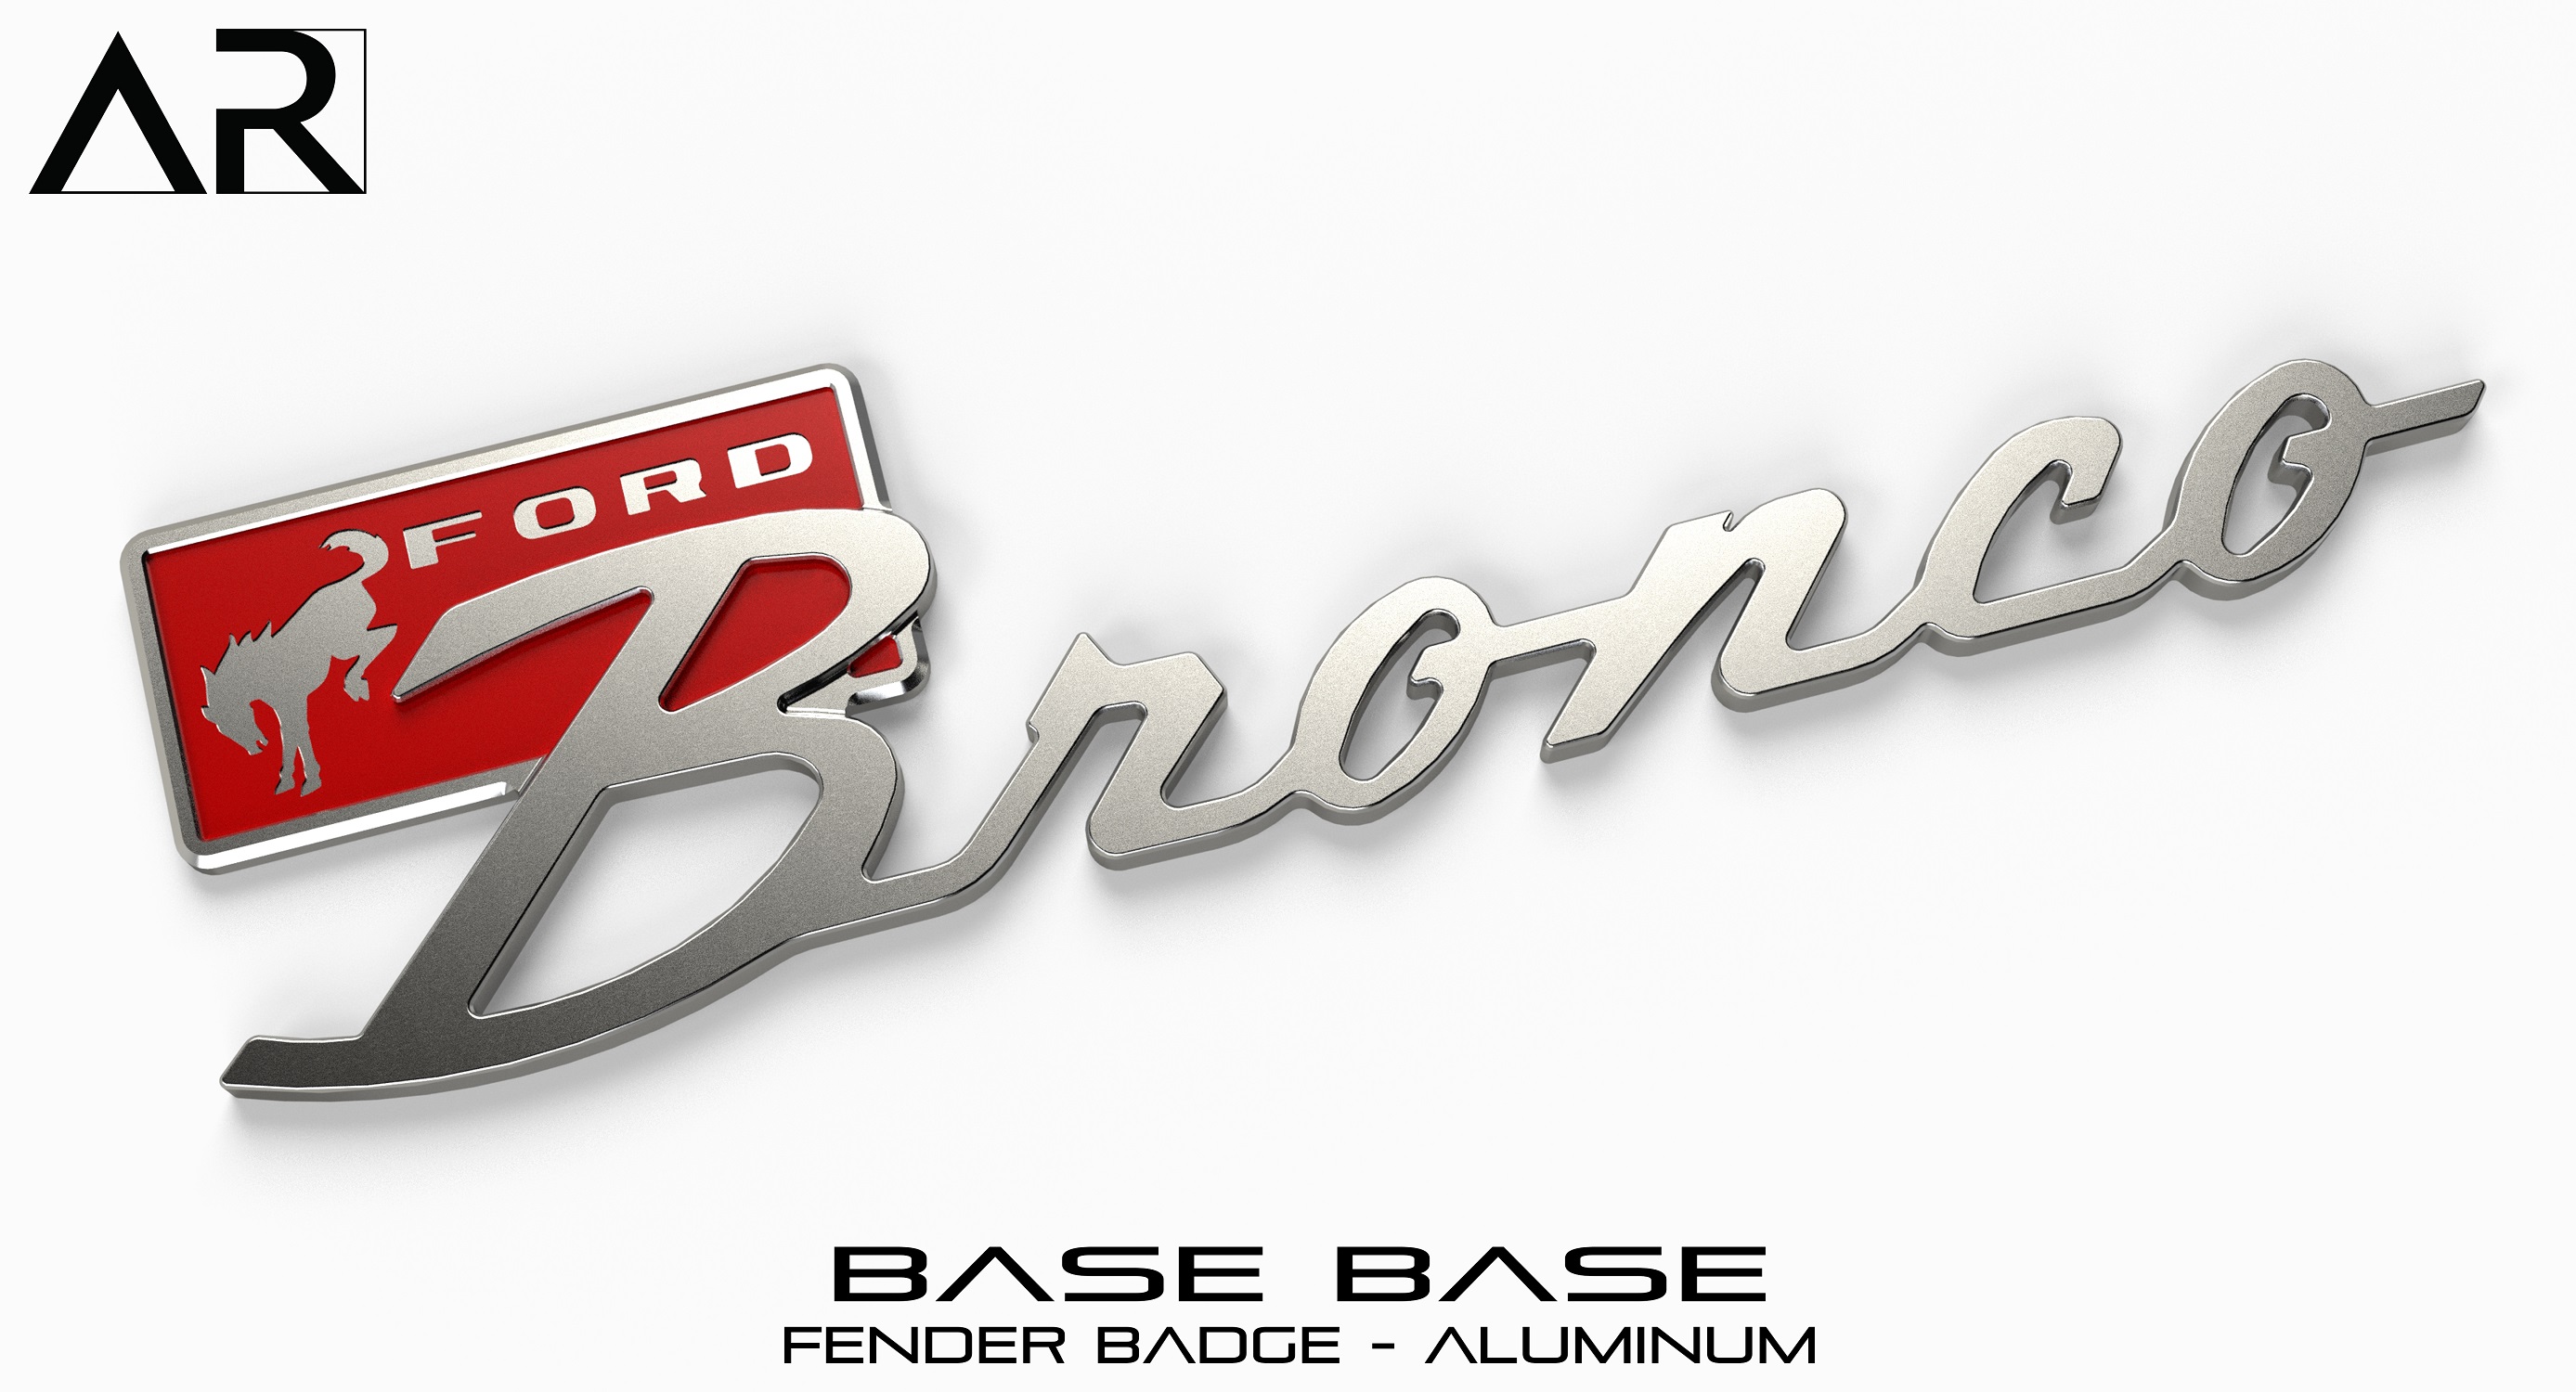 Ford Bronco AR | BRONCO CLASSIC DNA Fender Badge 16010012 - Fender Badge - Base Base - Aluminum